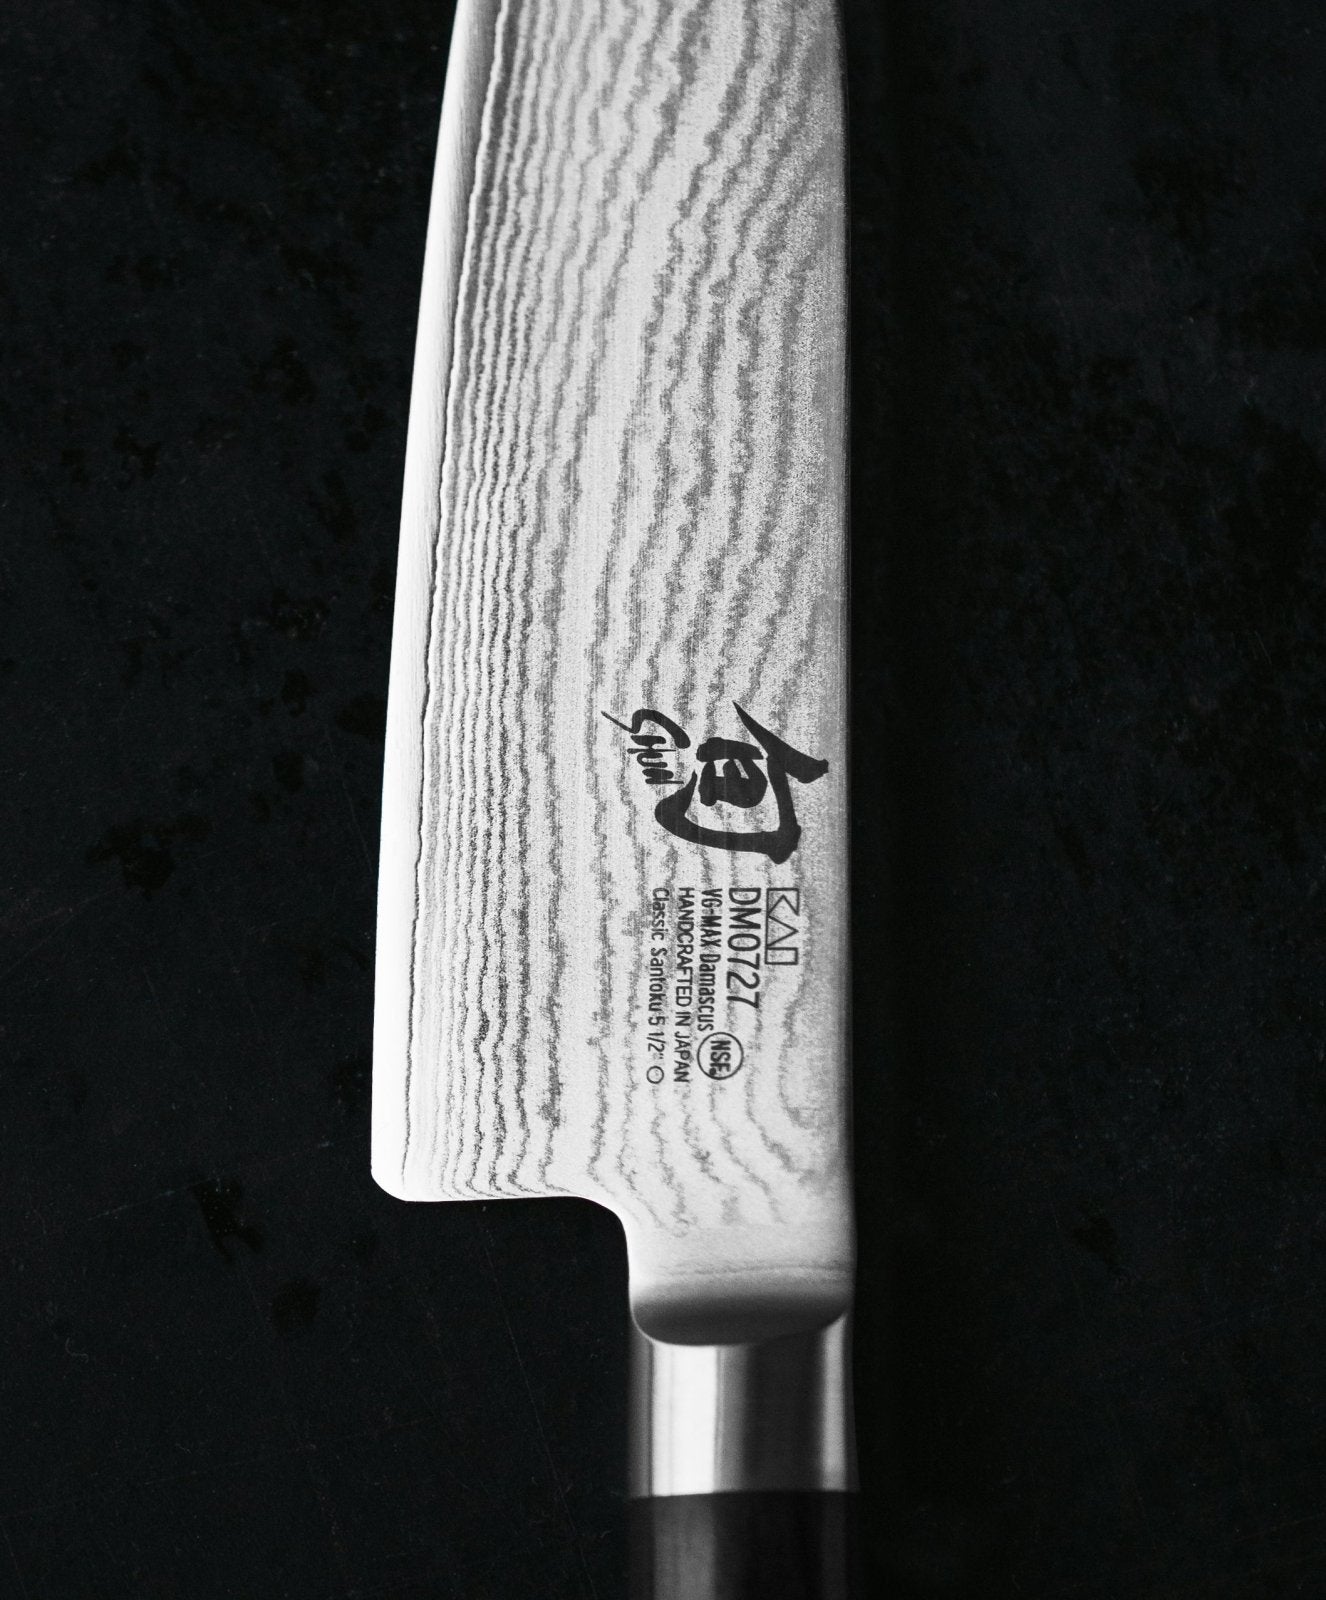 KAI Shun 25cm Chefs Knife - KAI-DM-0707 - The Cotswold Knife Company